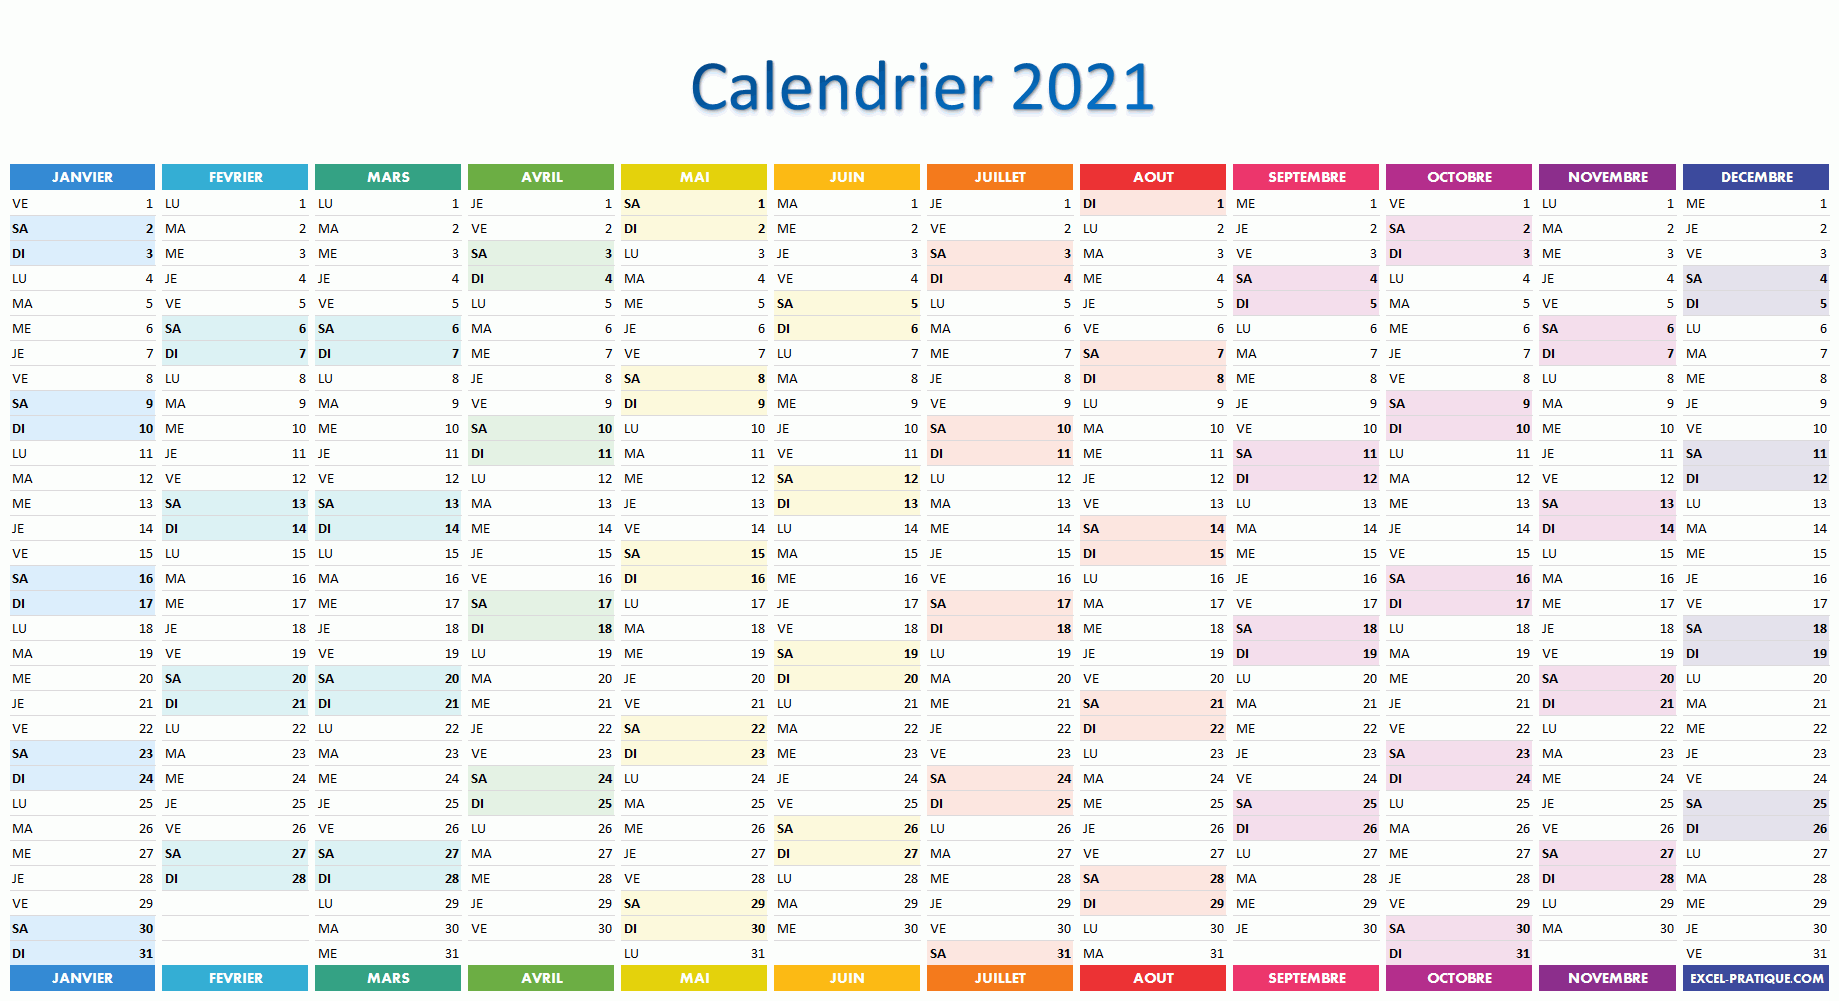 Calendrier Libreoffice 2021 Calendrier 2021 simple